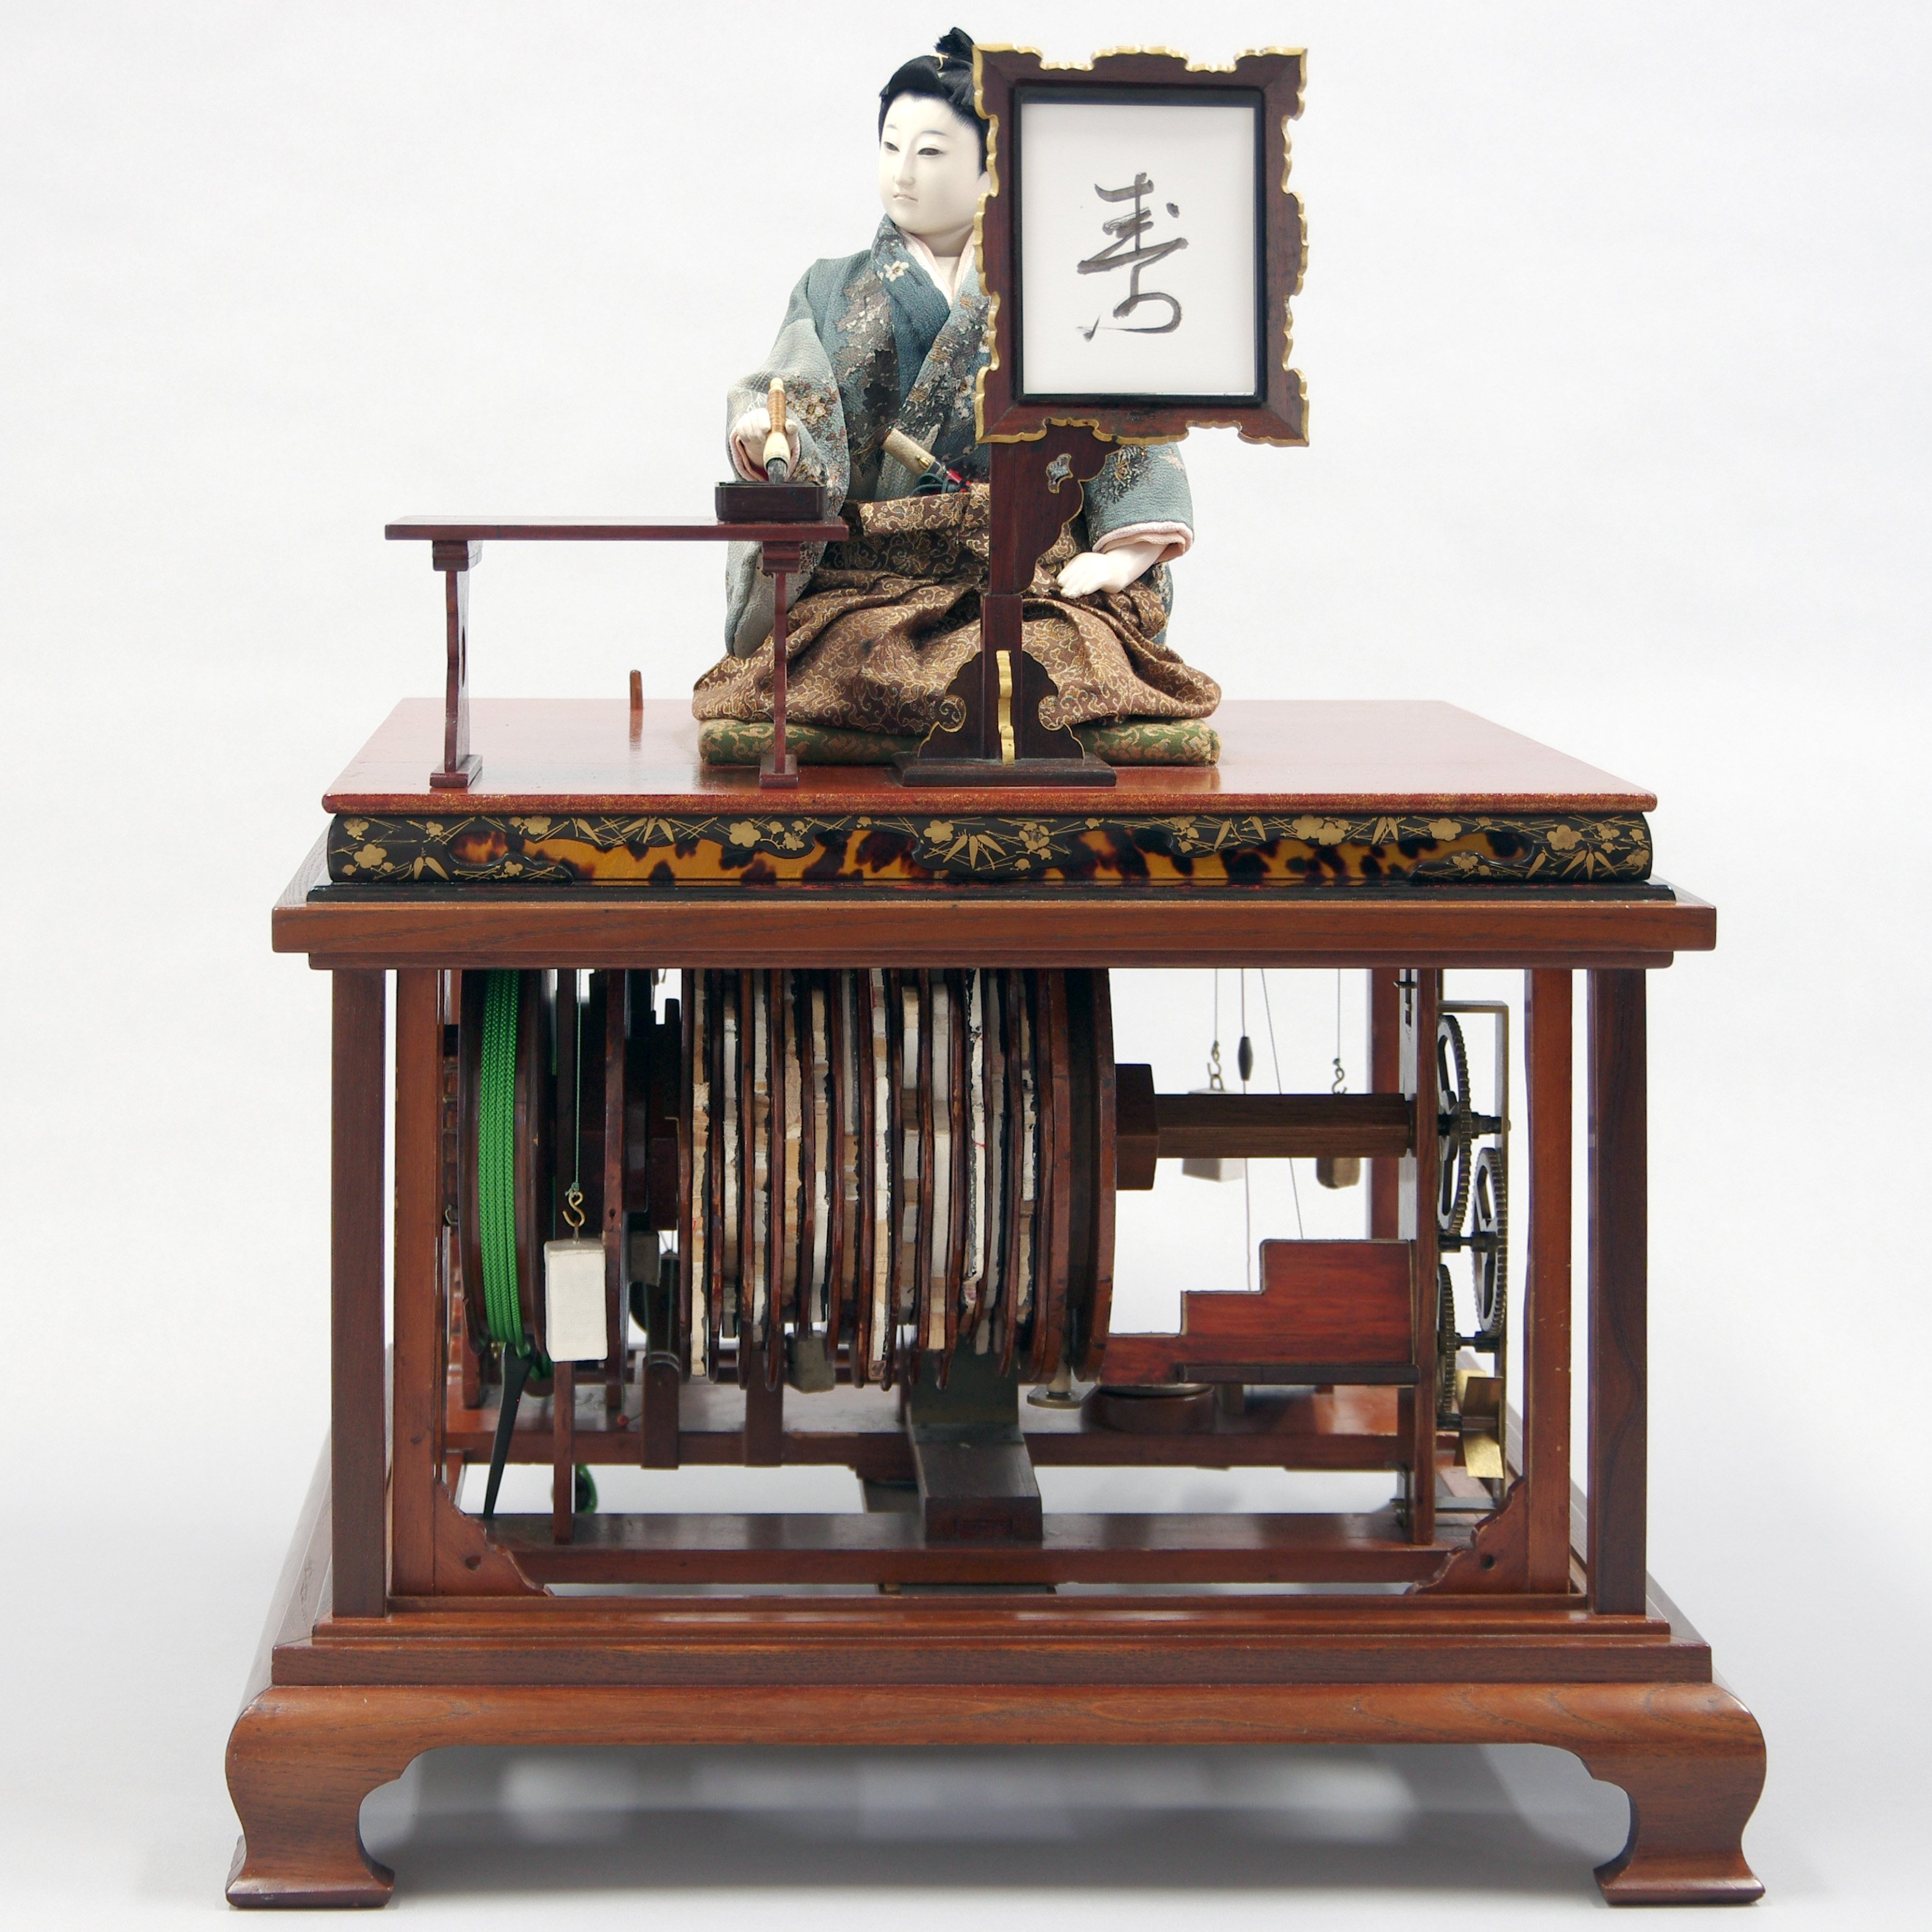 karakuri-ningyo-histoire-automate-japon-calligraphie